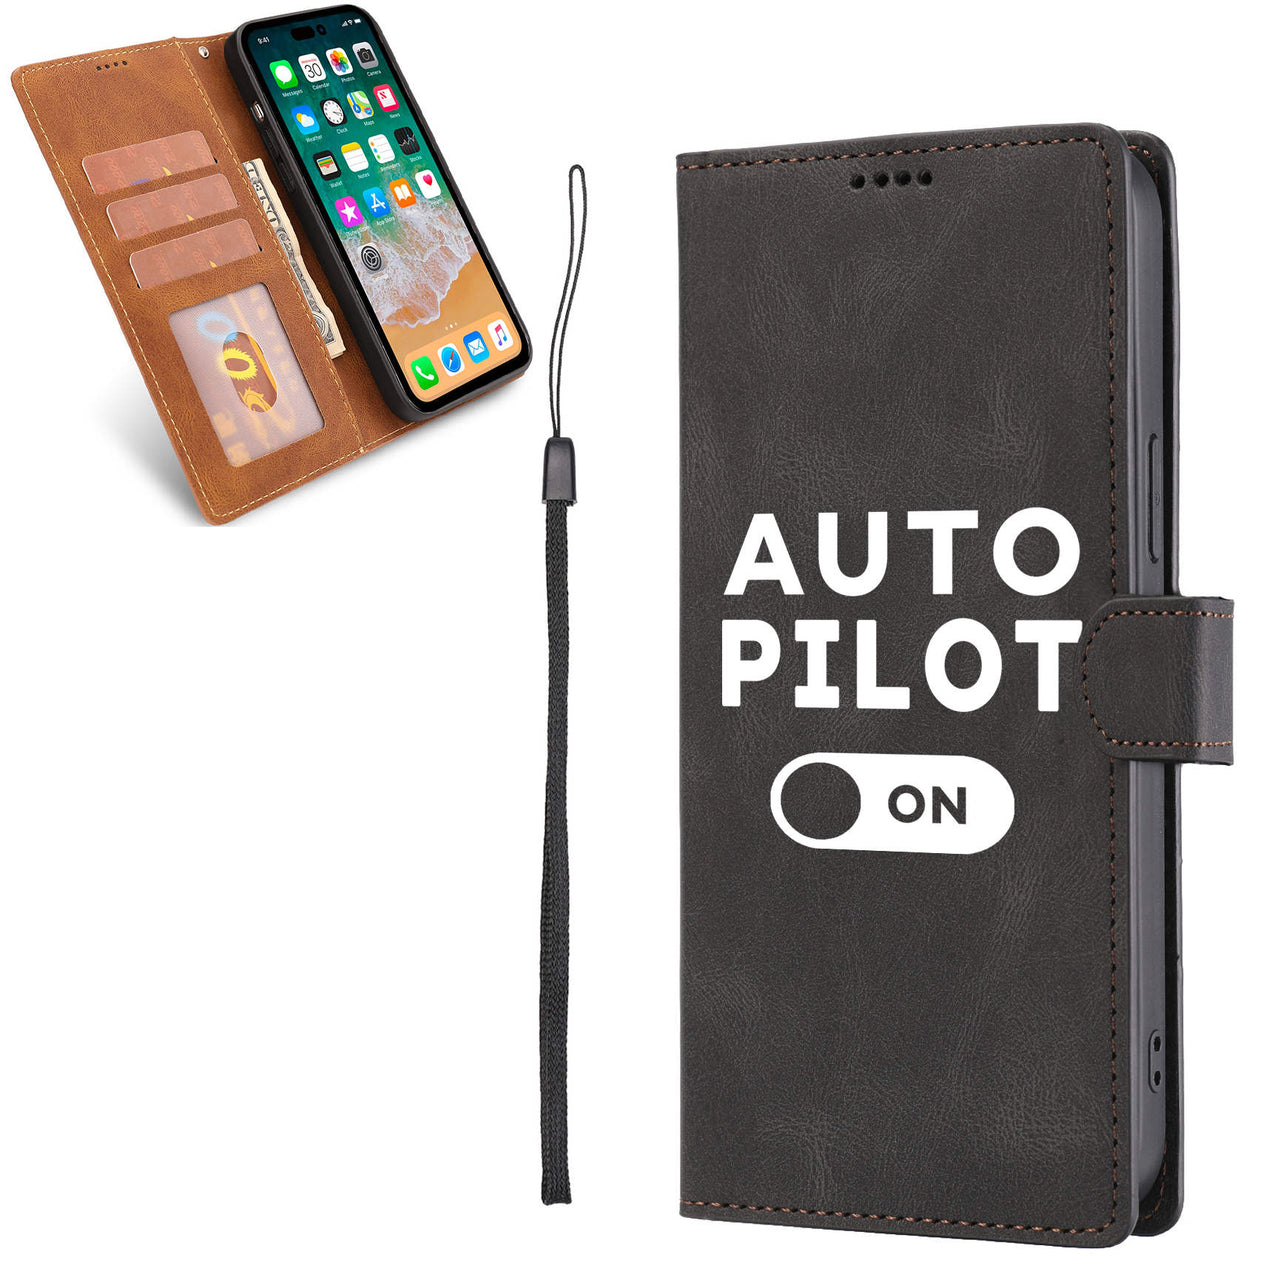 Auto Pilot ON Designed Leather iPhone Cases